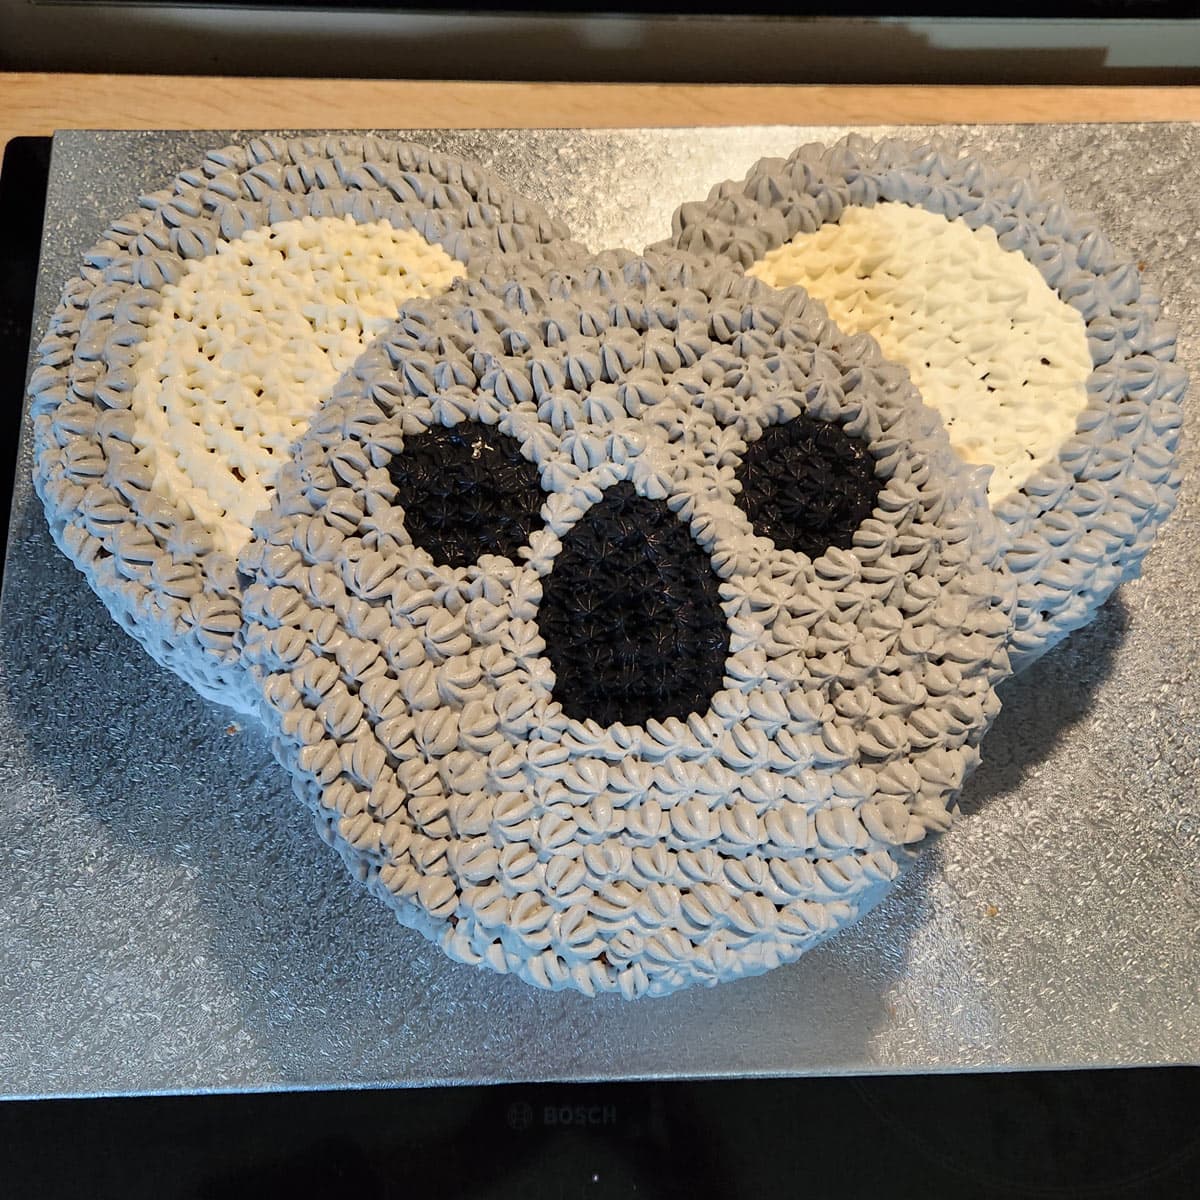 easy koala cake served on a silver cake board